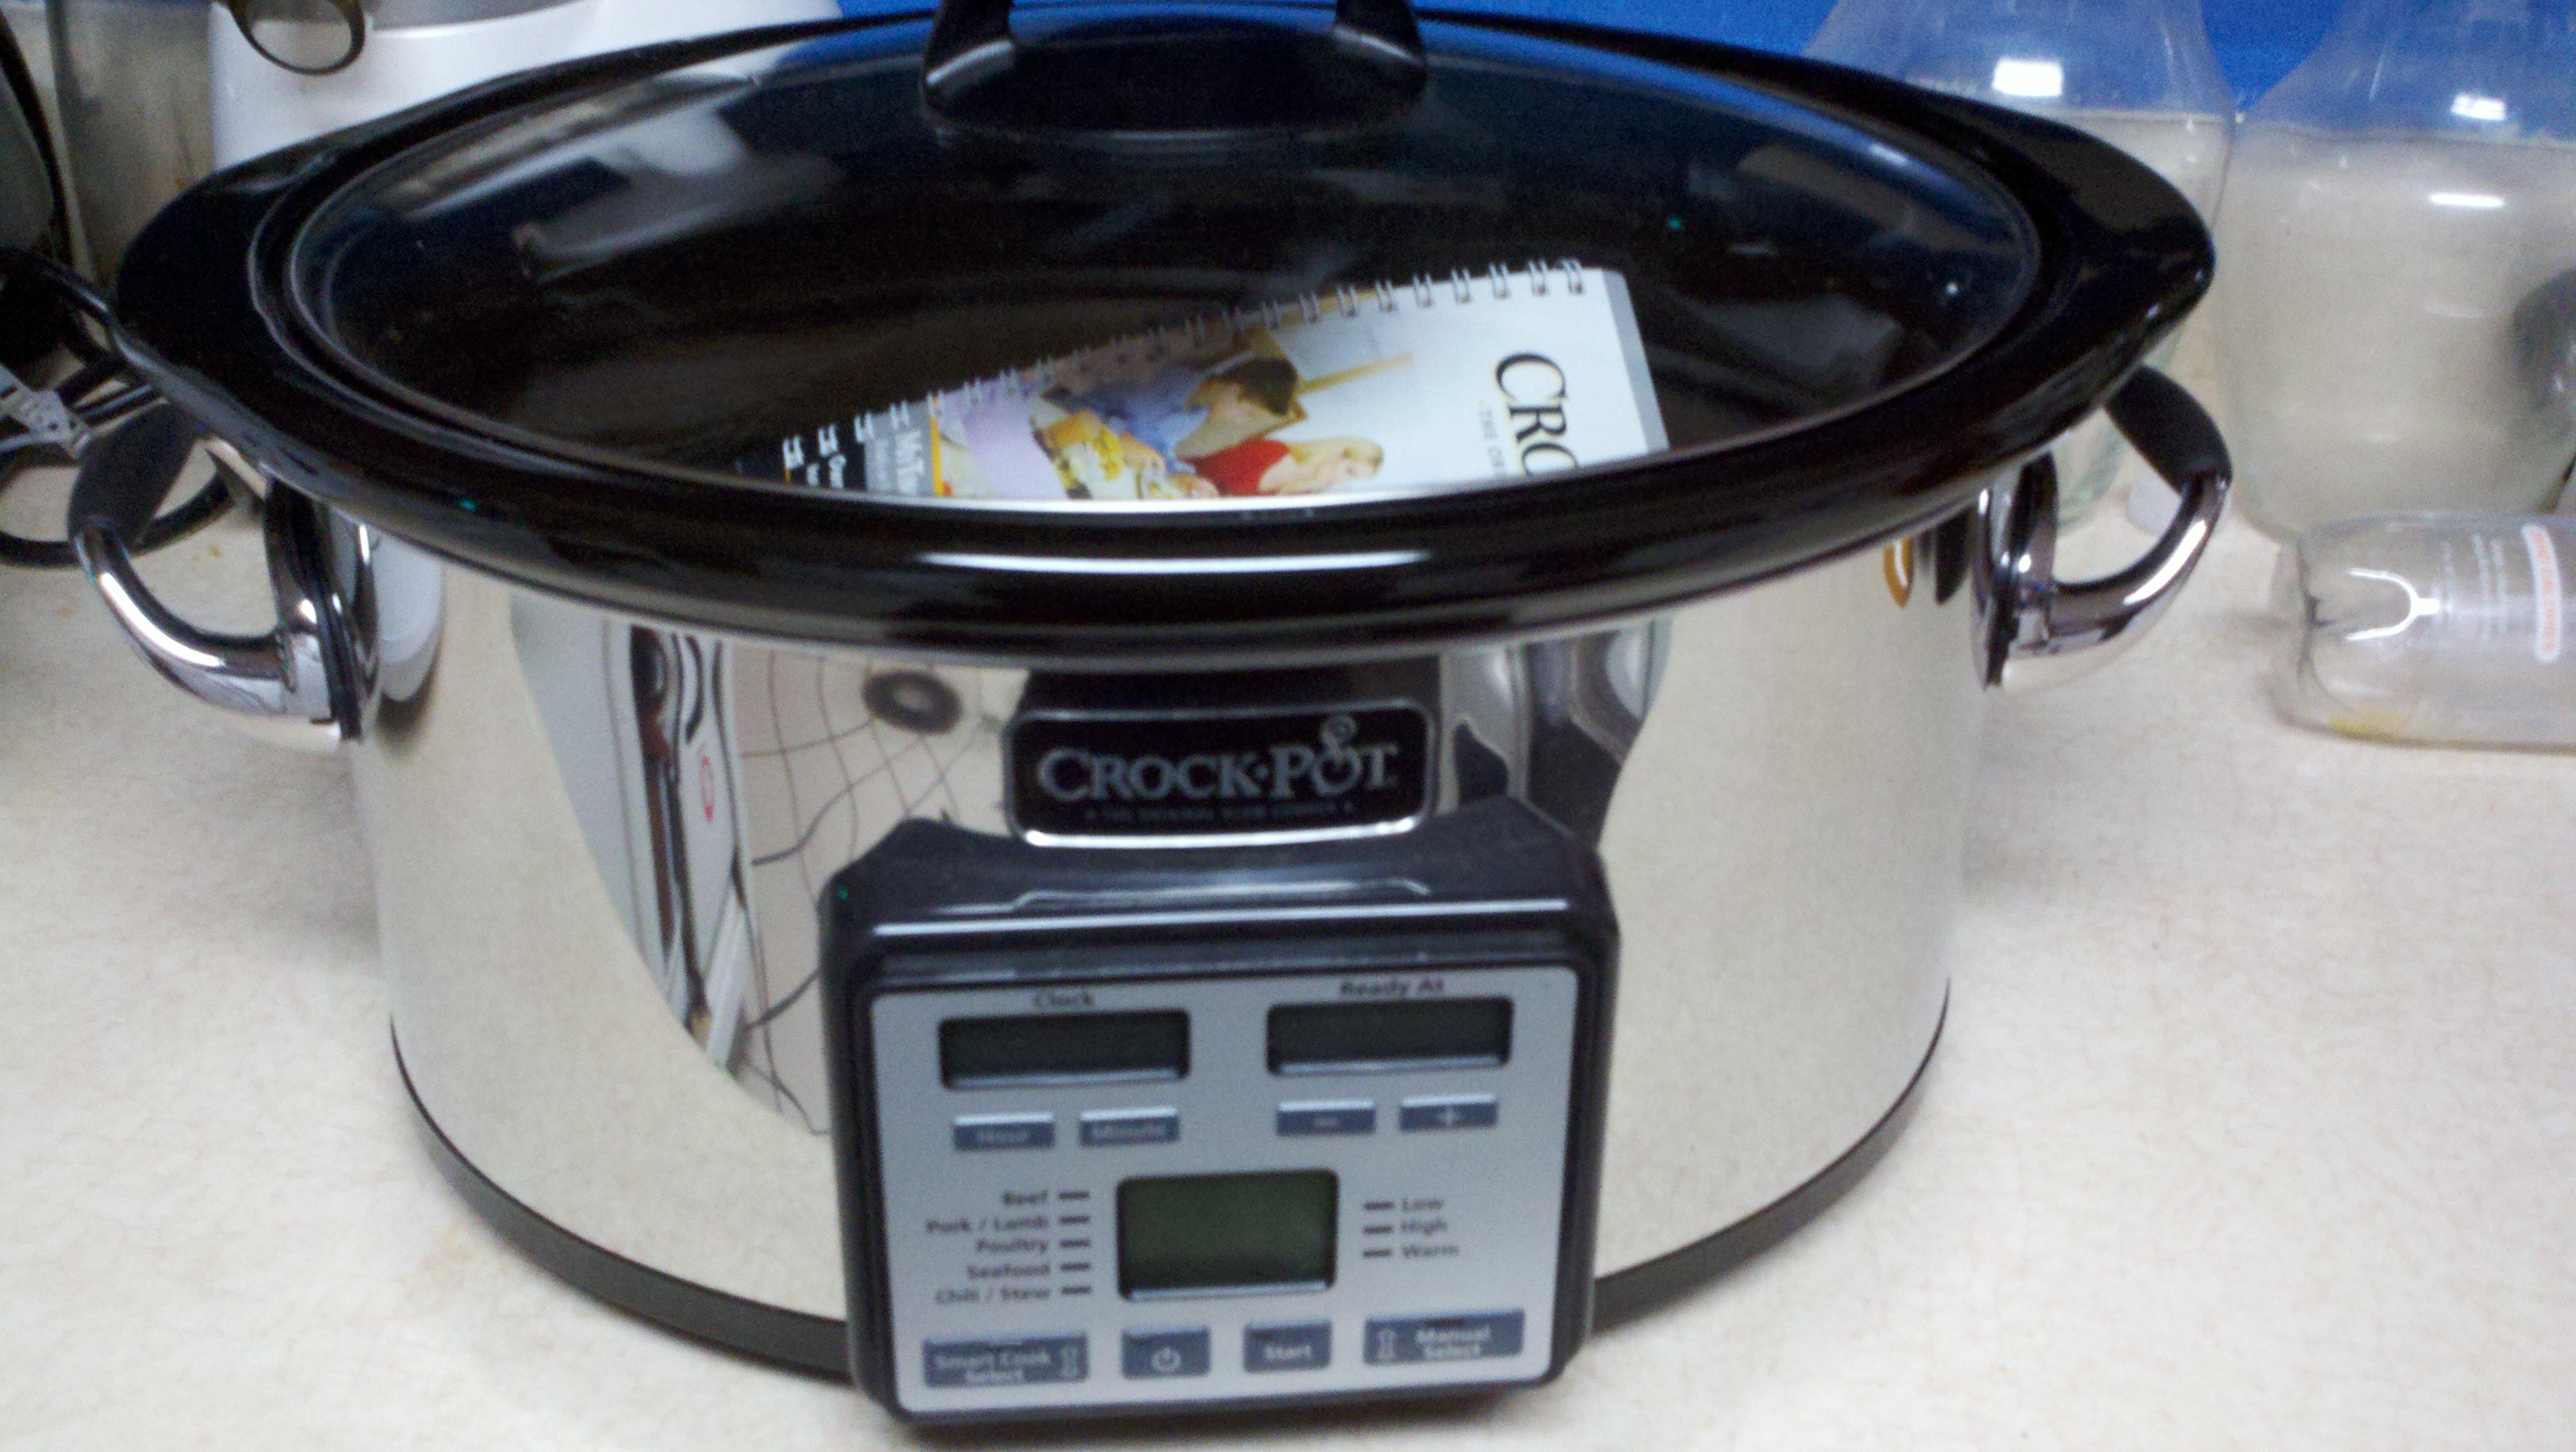 Crock-Pot “My Time Slow Cooker” Review - Lori Twichell